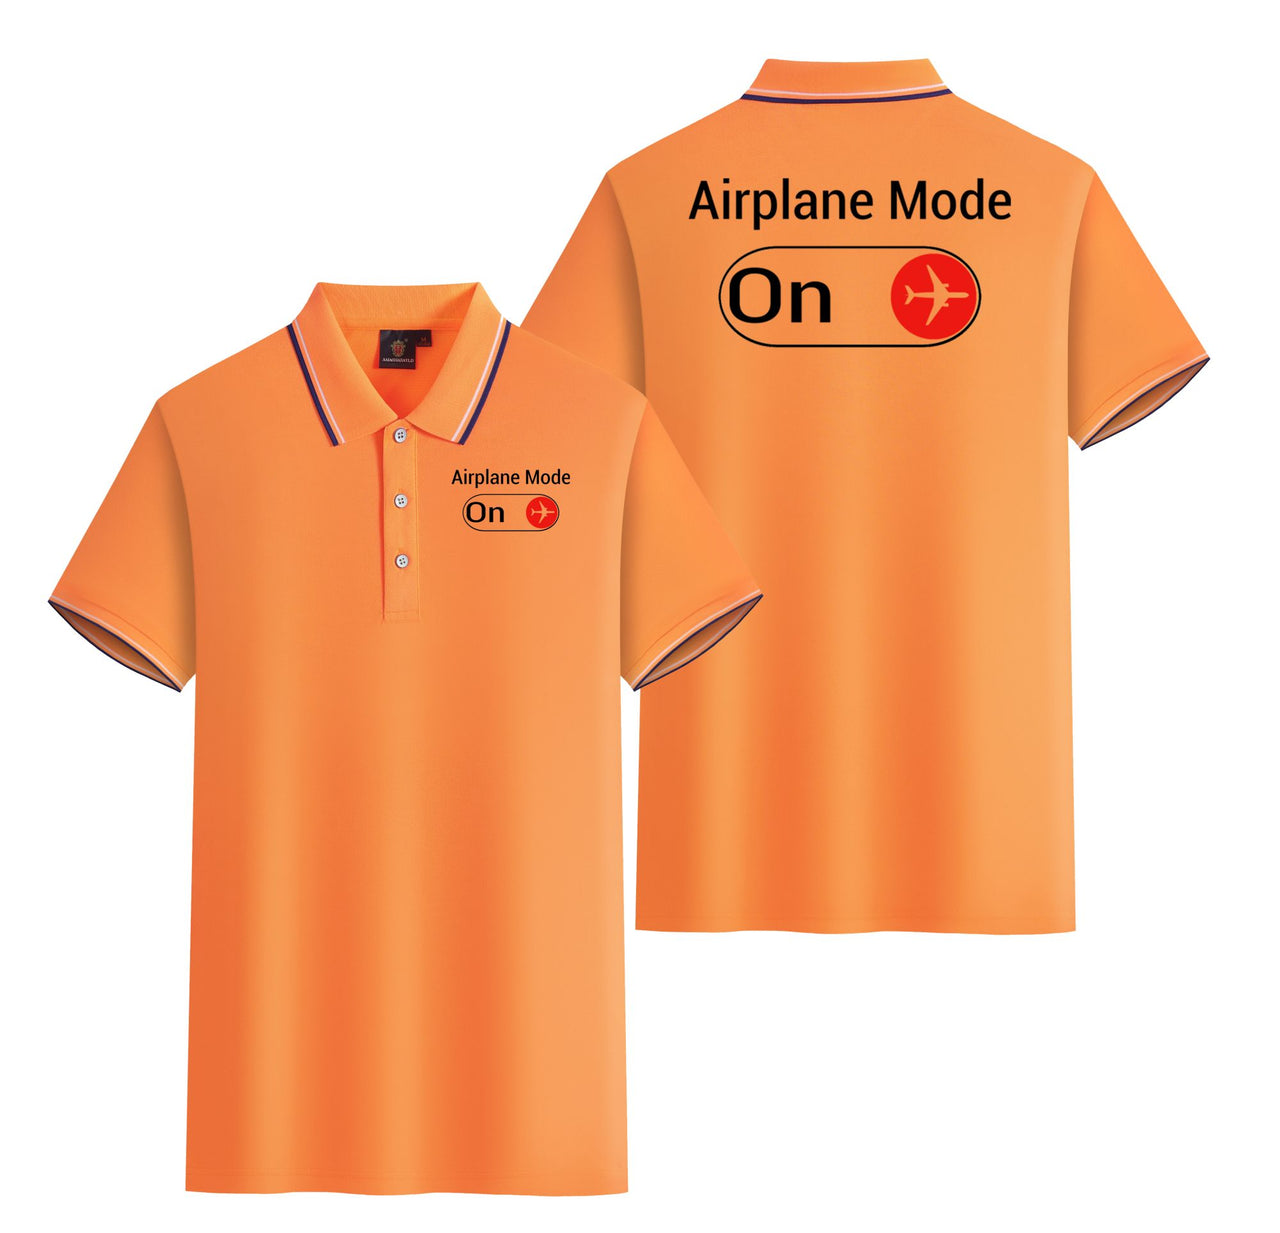 Airplane Mode On Designed Stylish Polo T-Shirts (Double-Side)